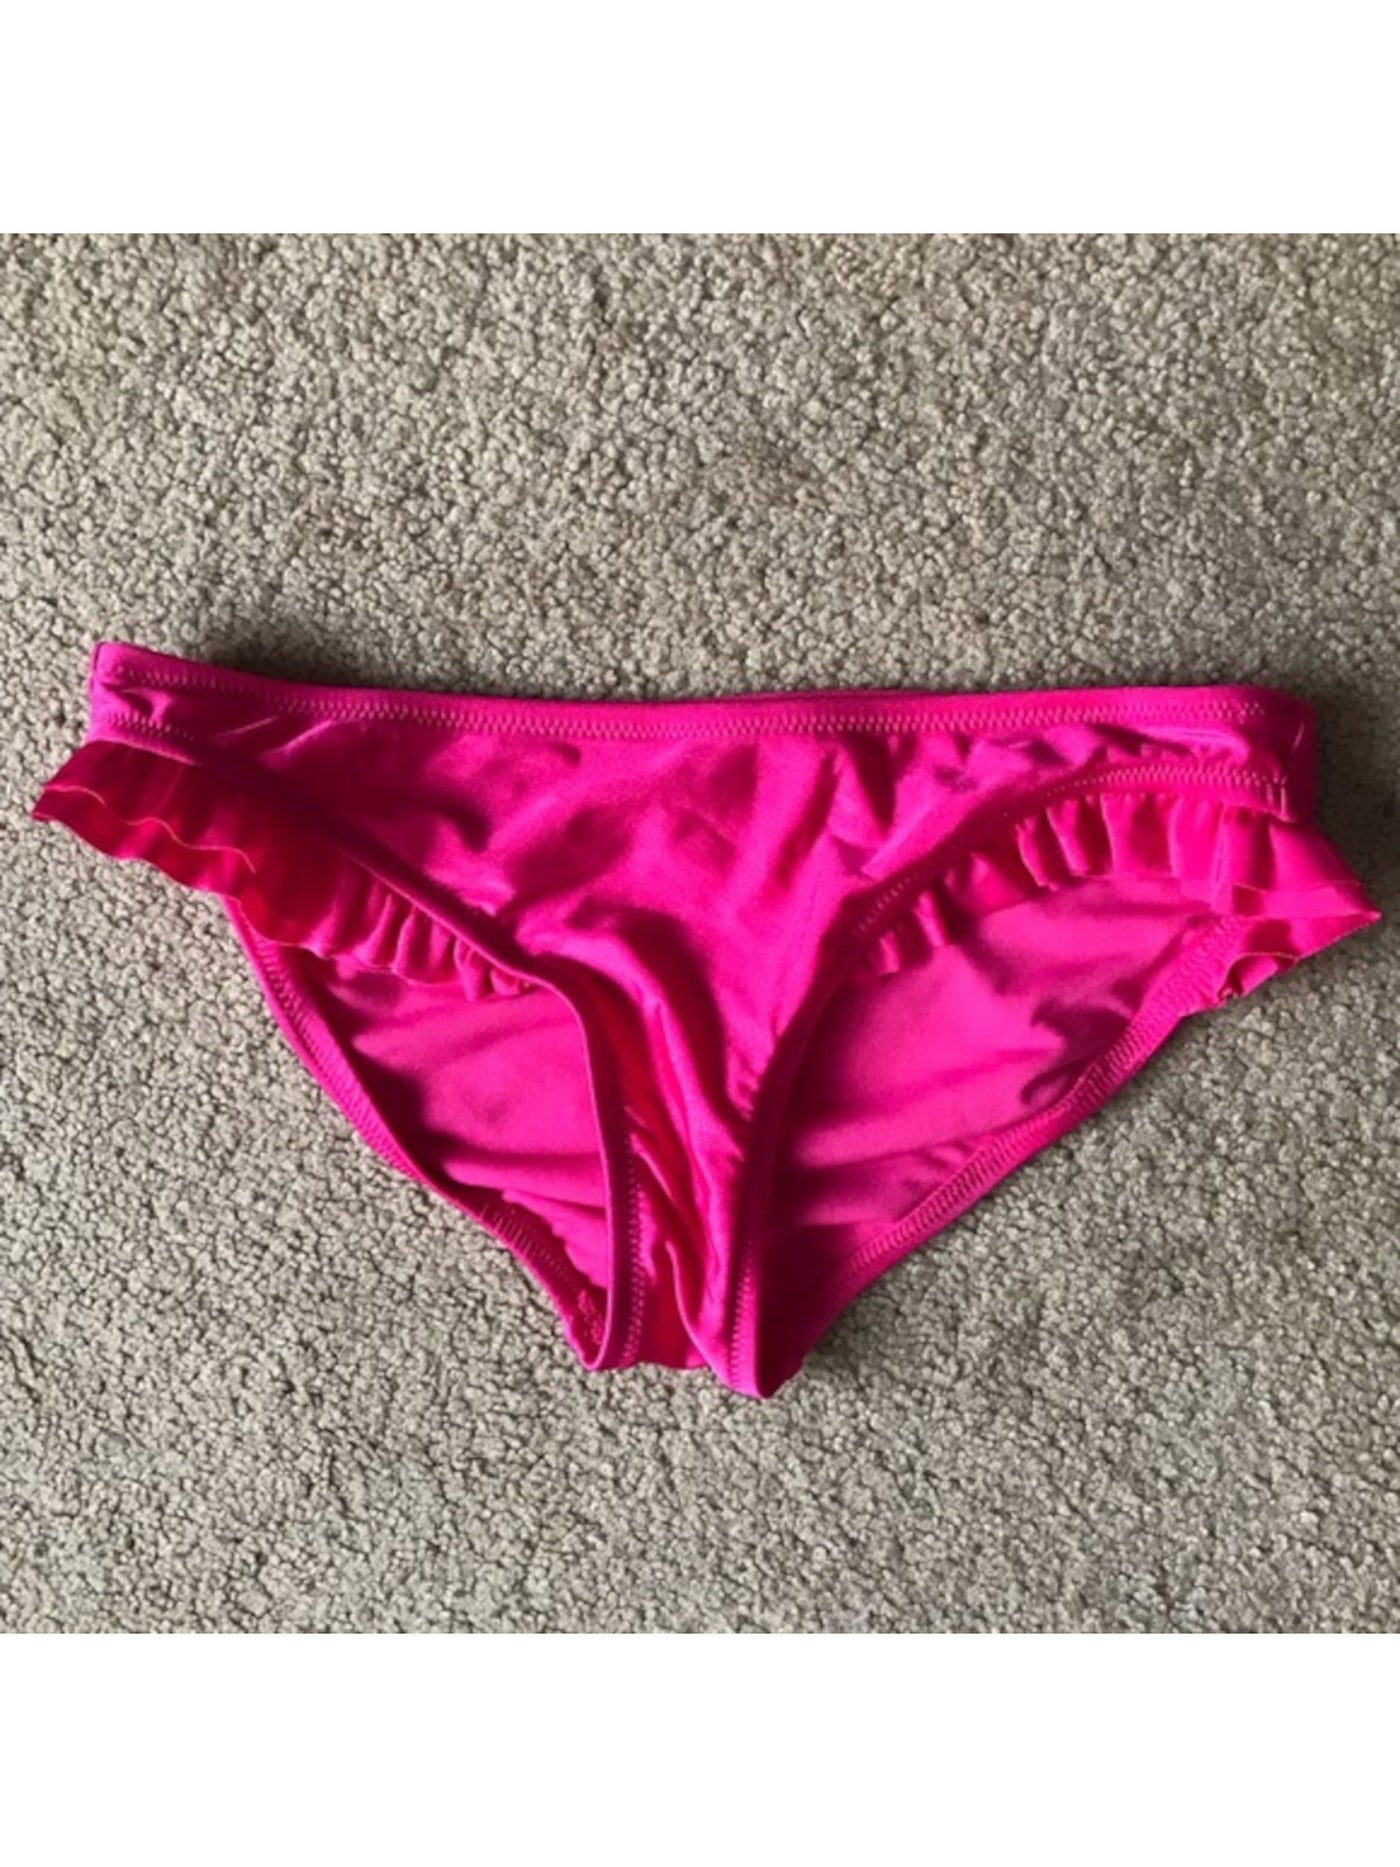 OLD NAVY Women's Pink Bikini Bikini Bottom L